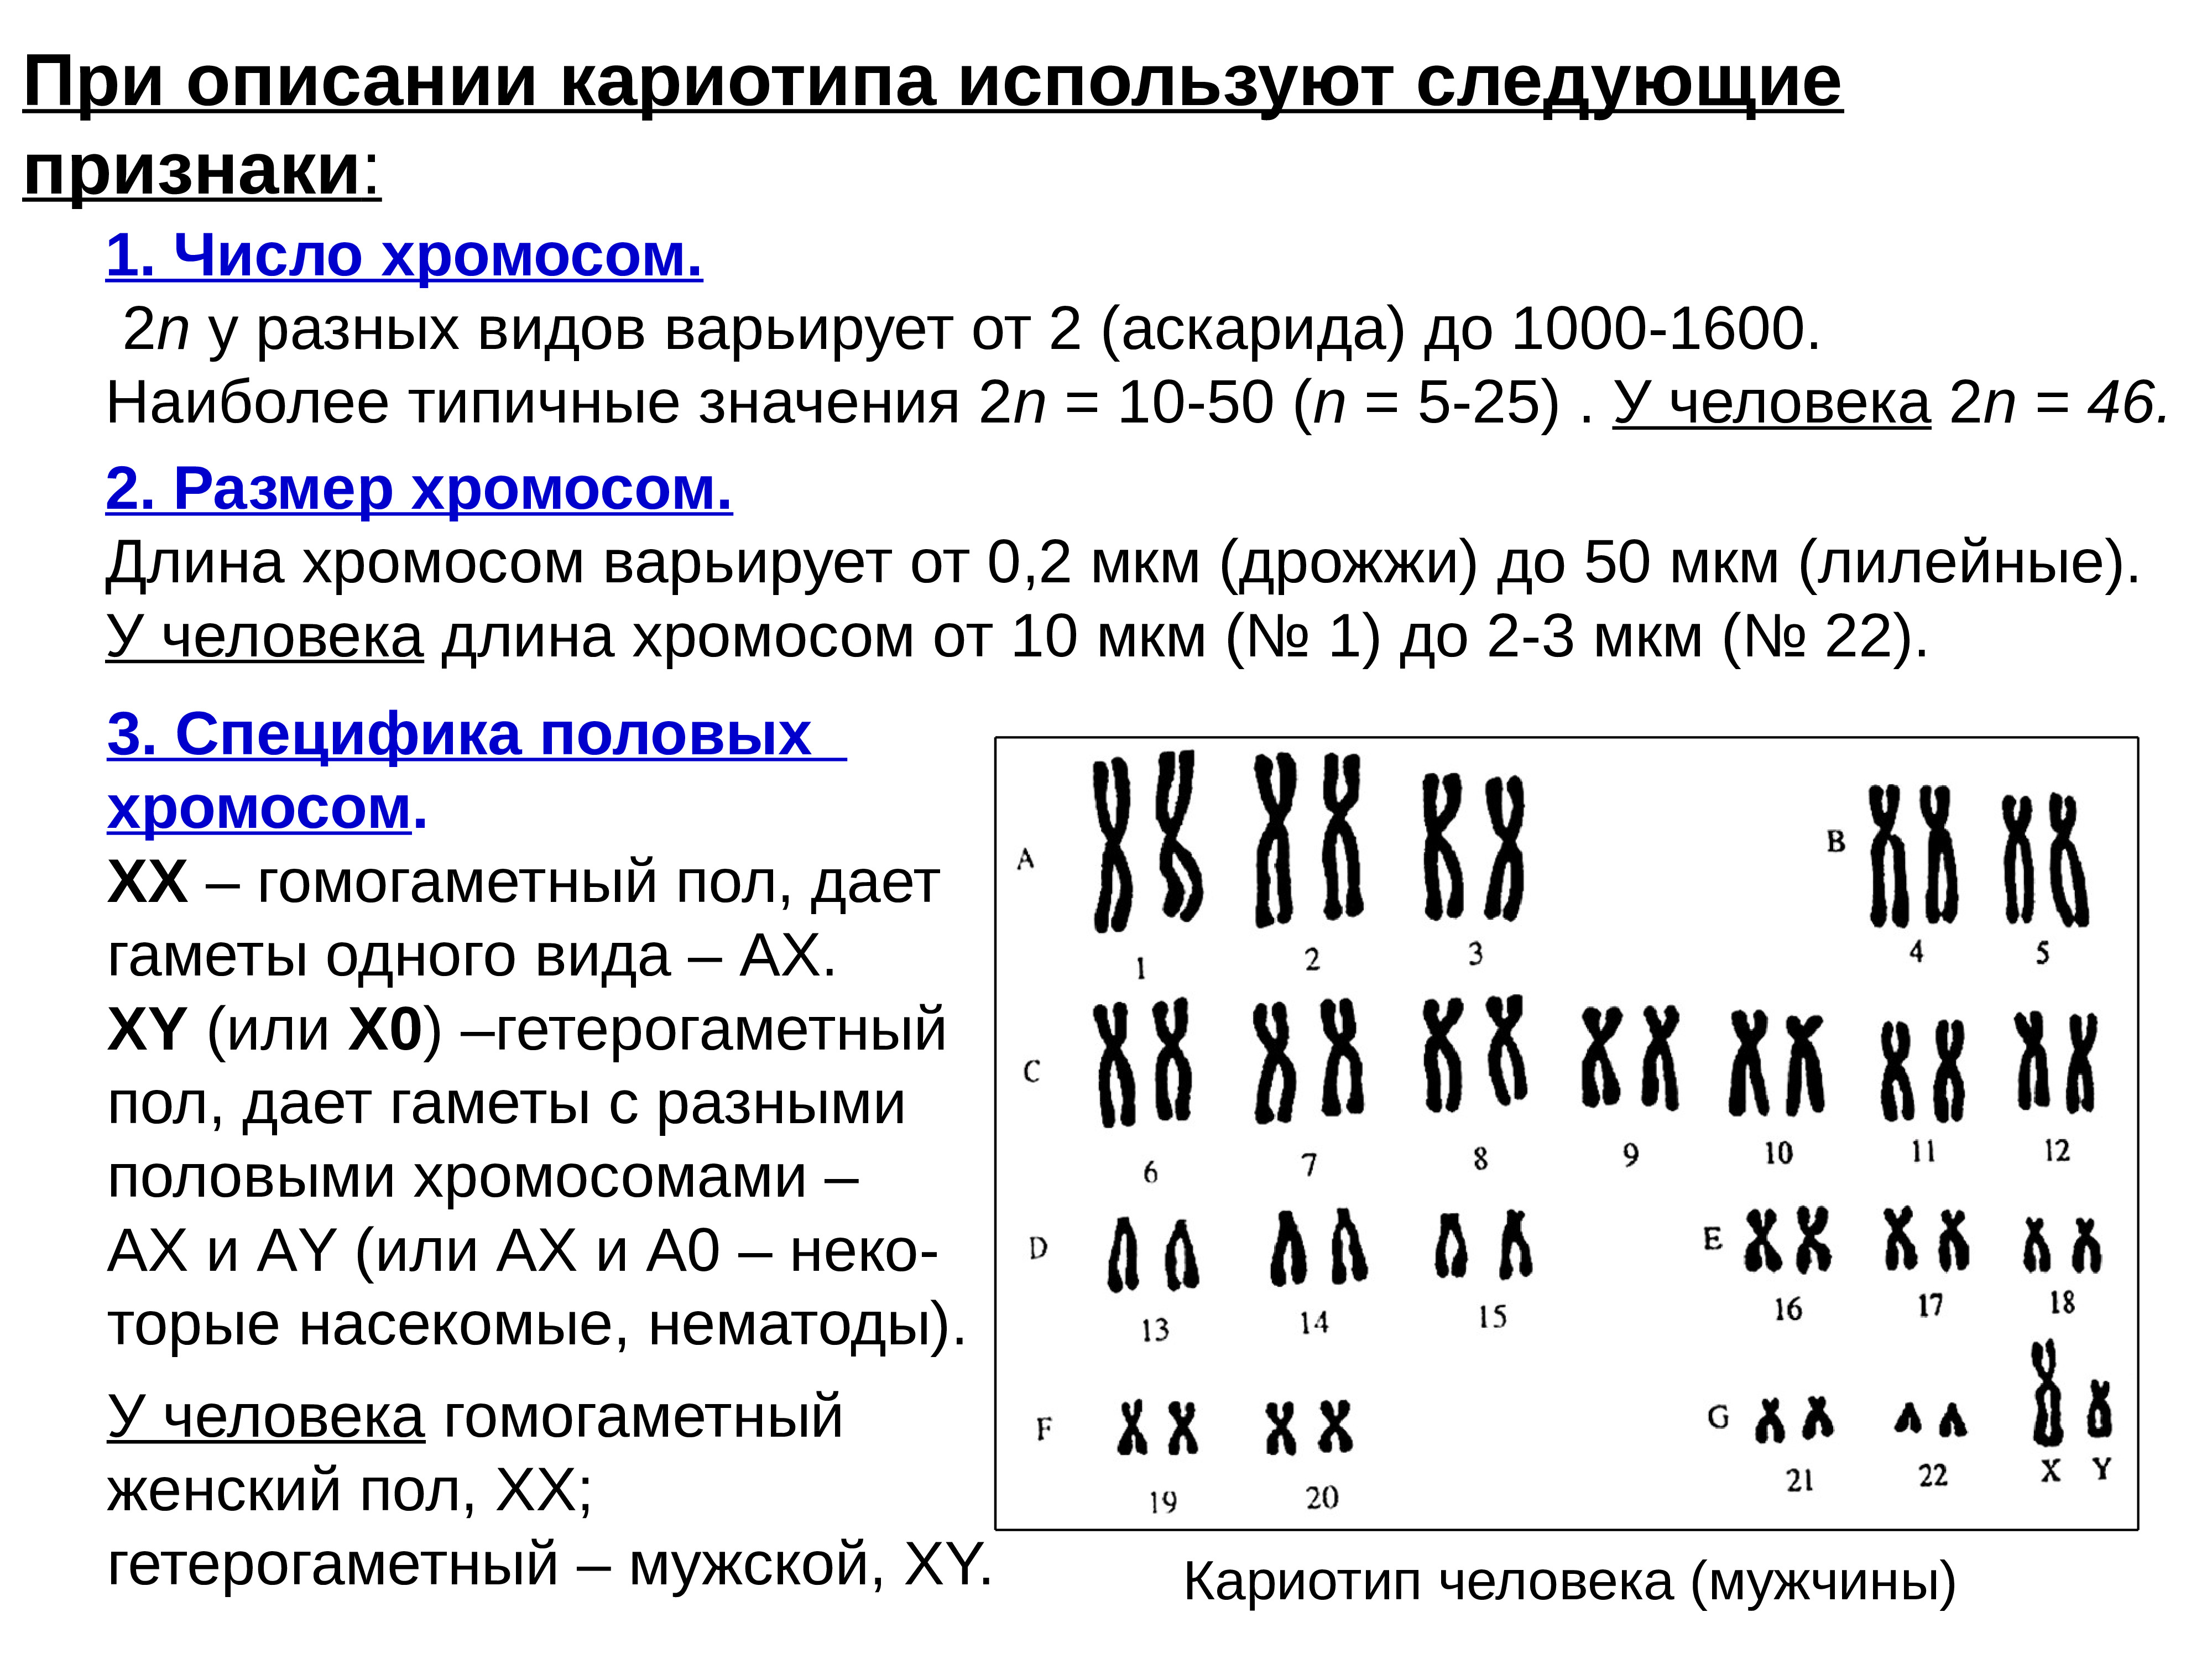 Количество хромосом в кариотипе человека. Формула кариотипа человека в норме. Характеристика кариотипа человека в норме. Кариотип таблица хромосом. Хромосомные формулы кариотипа.